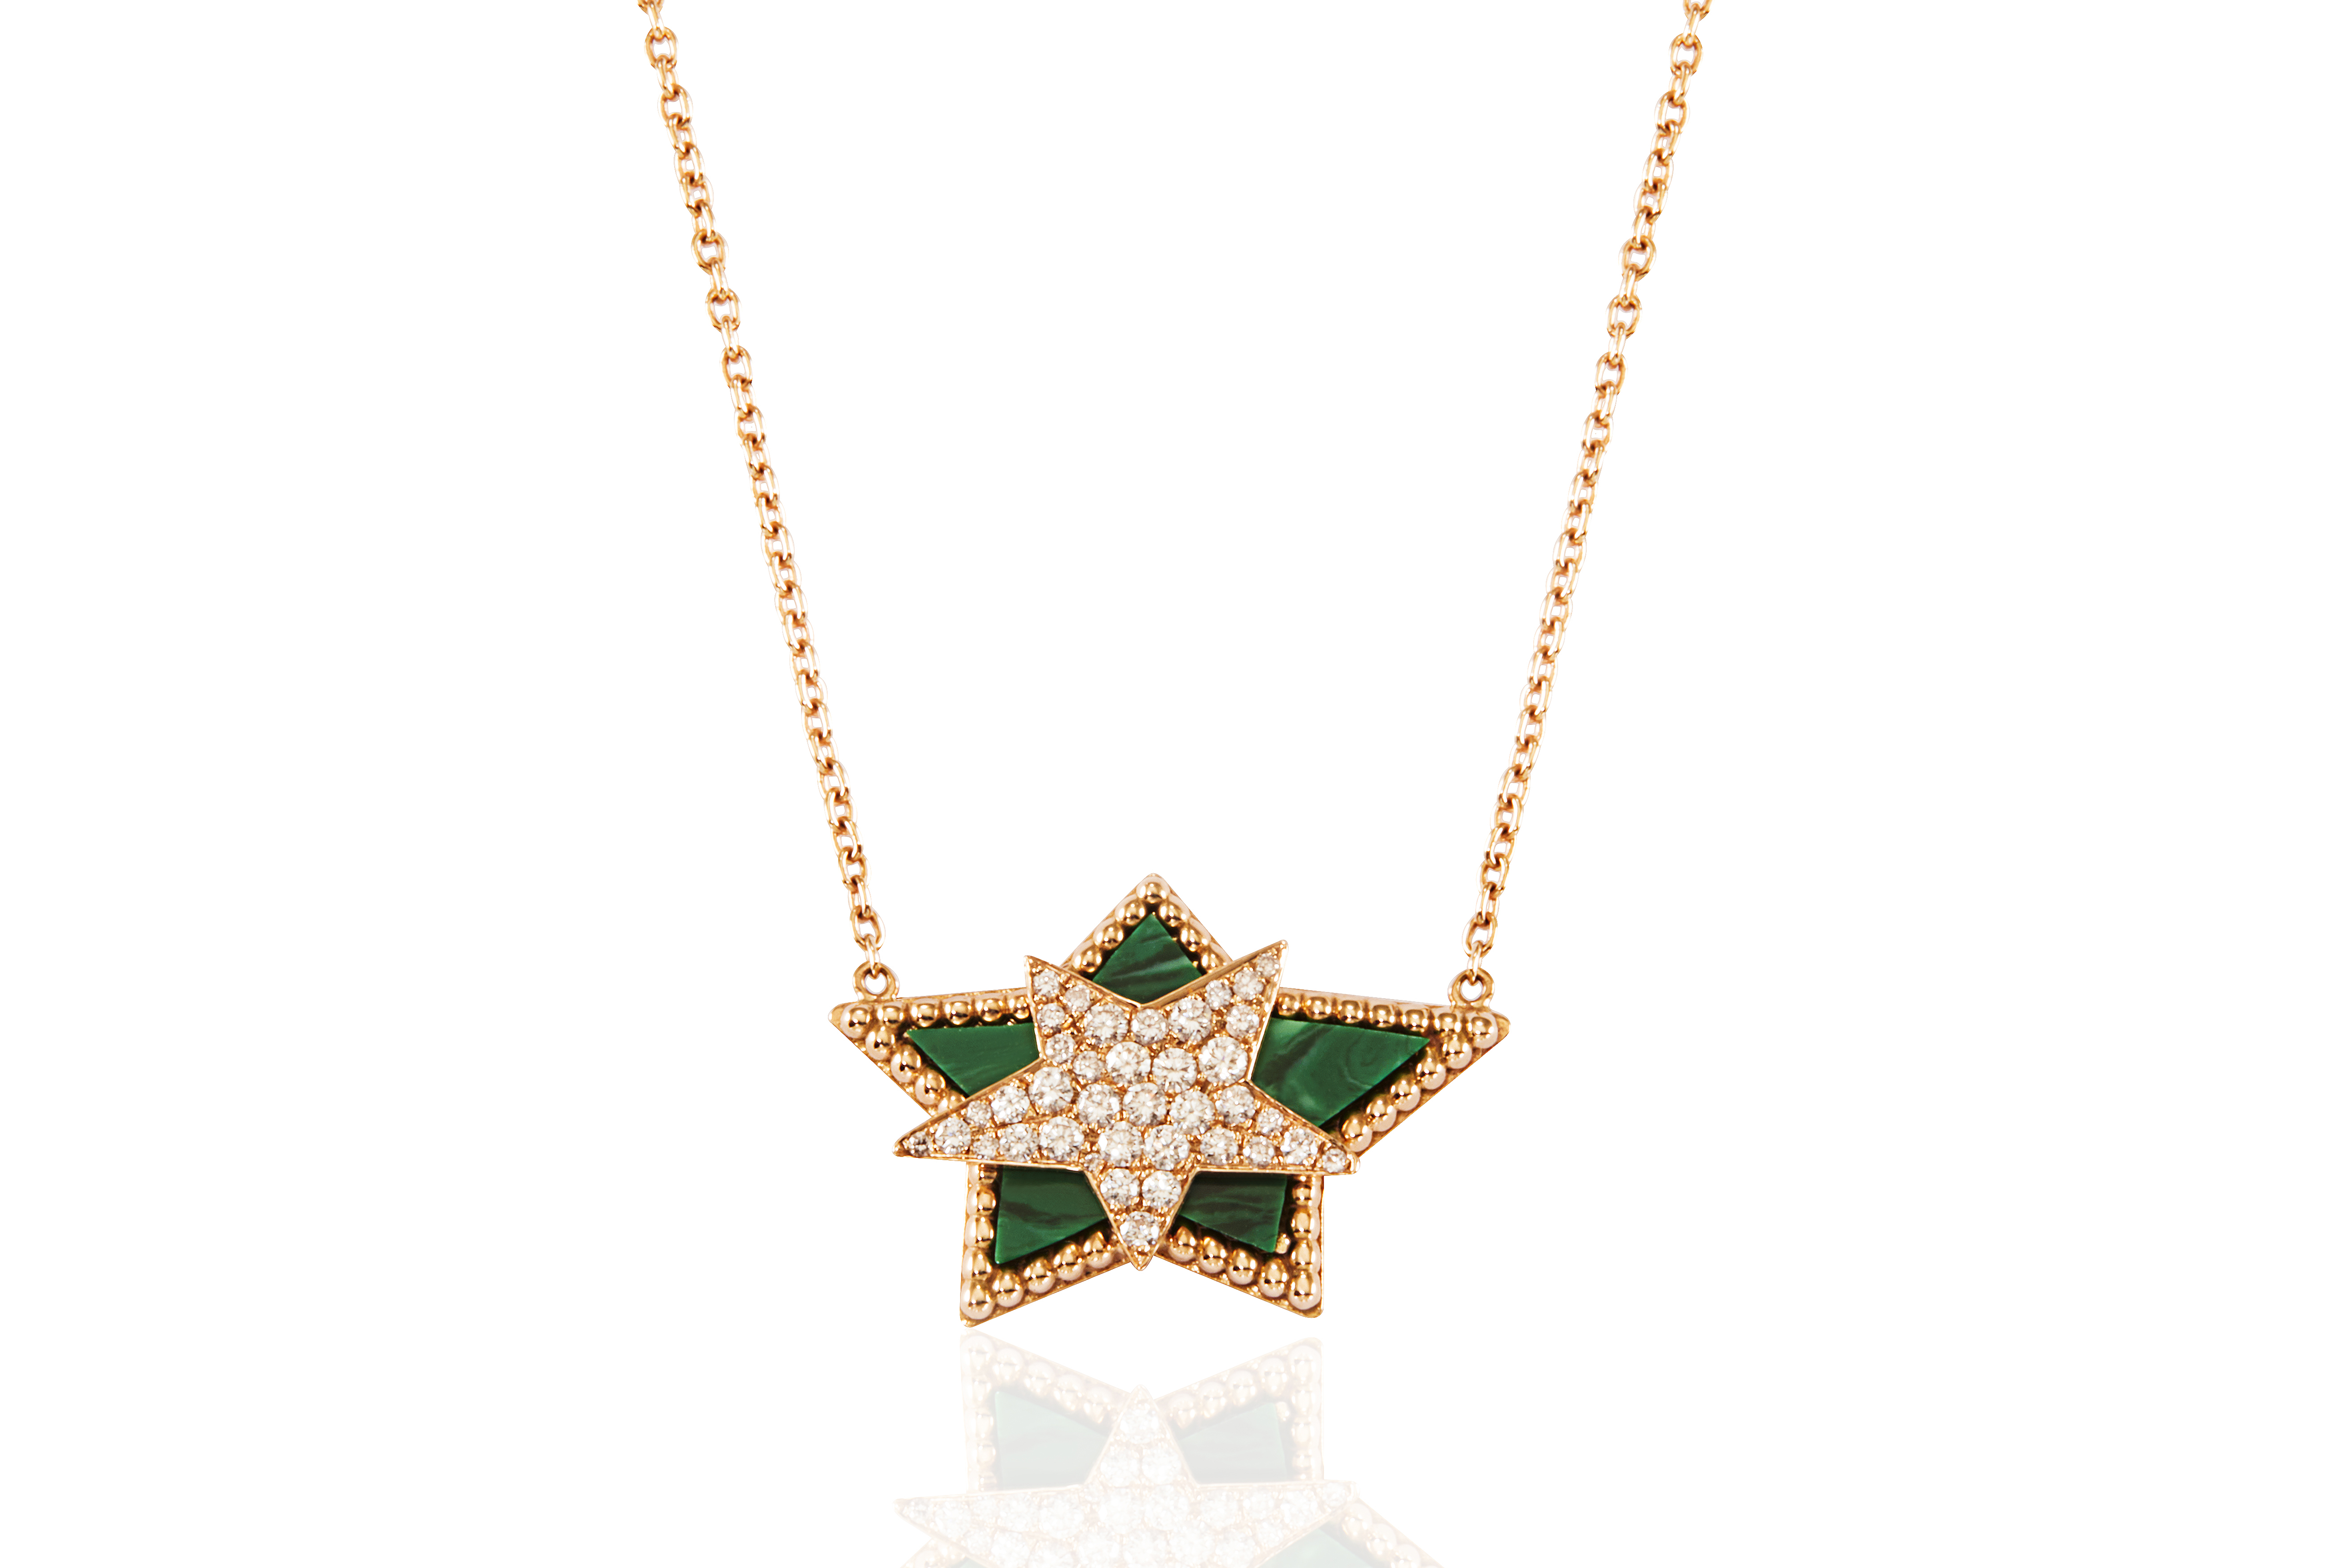 Etoile Celeste Pendant - Shop Online Mimia LeBlanc Jewelry